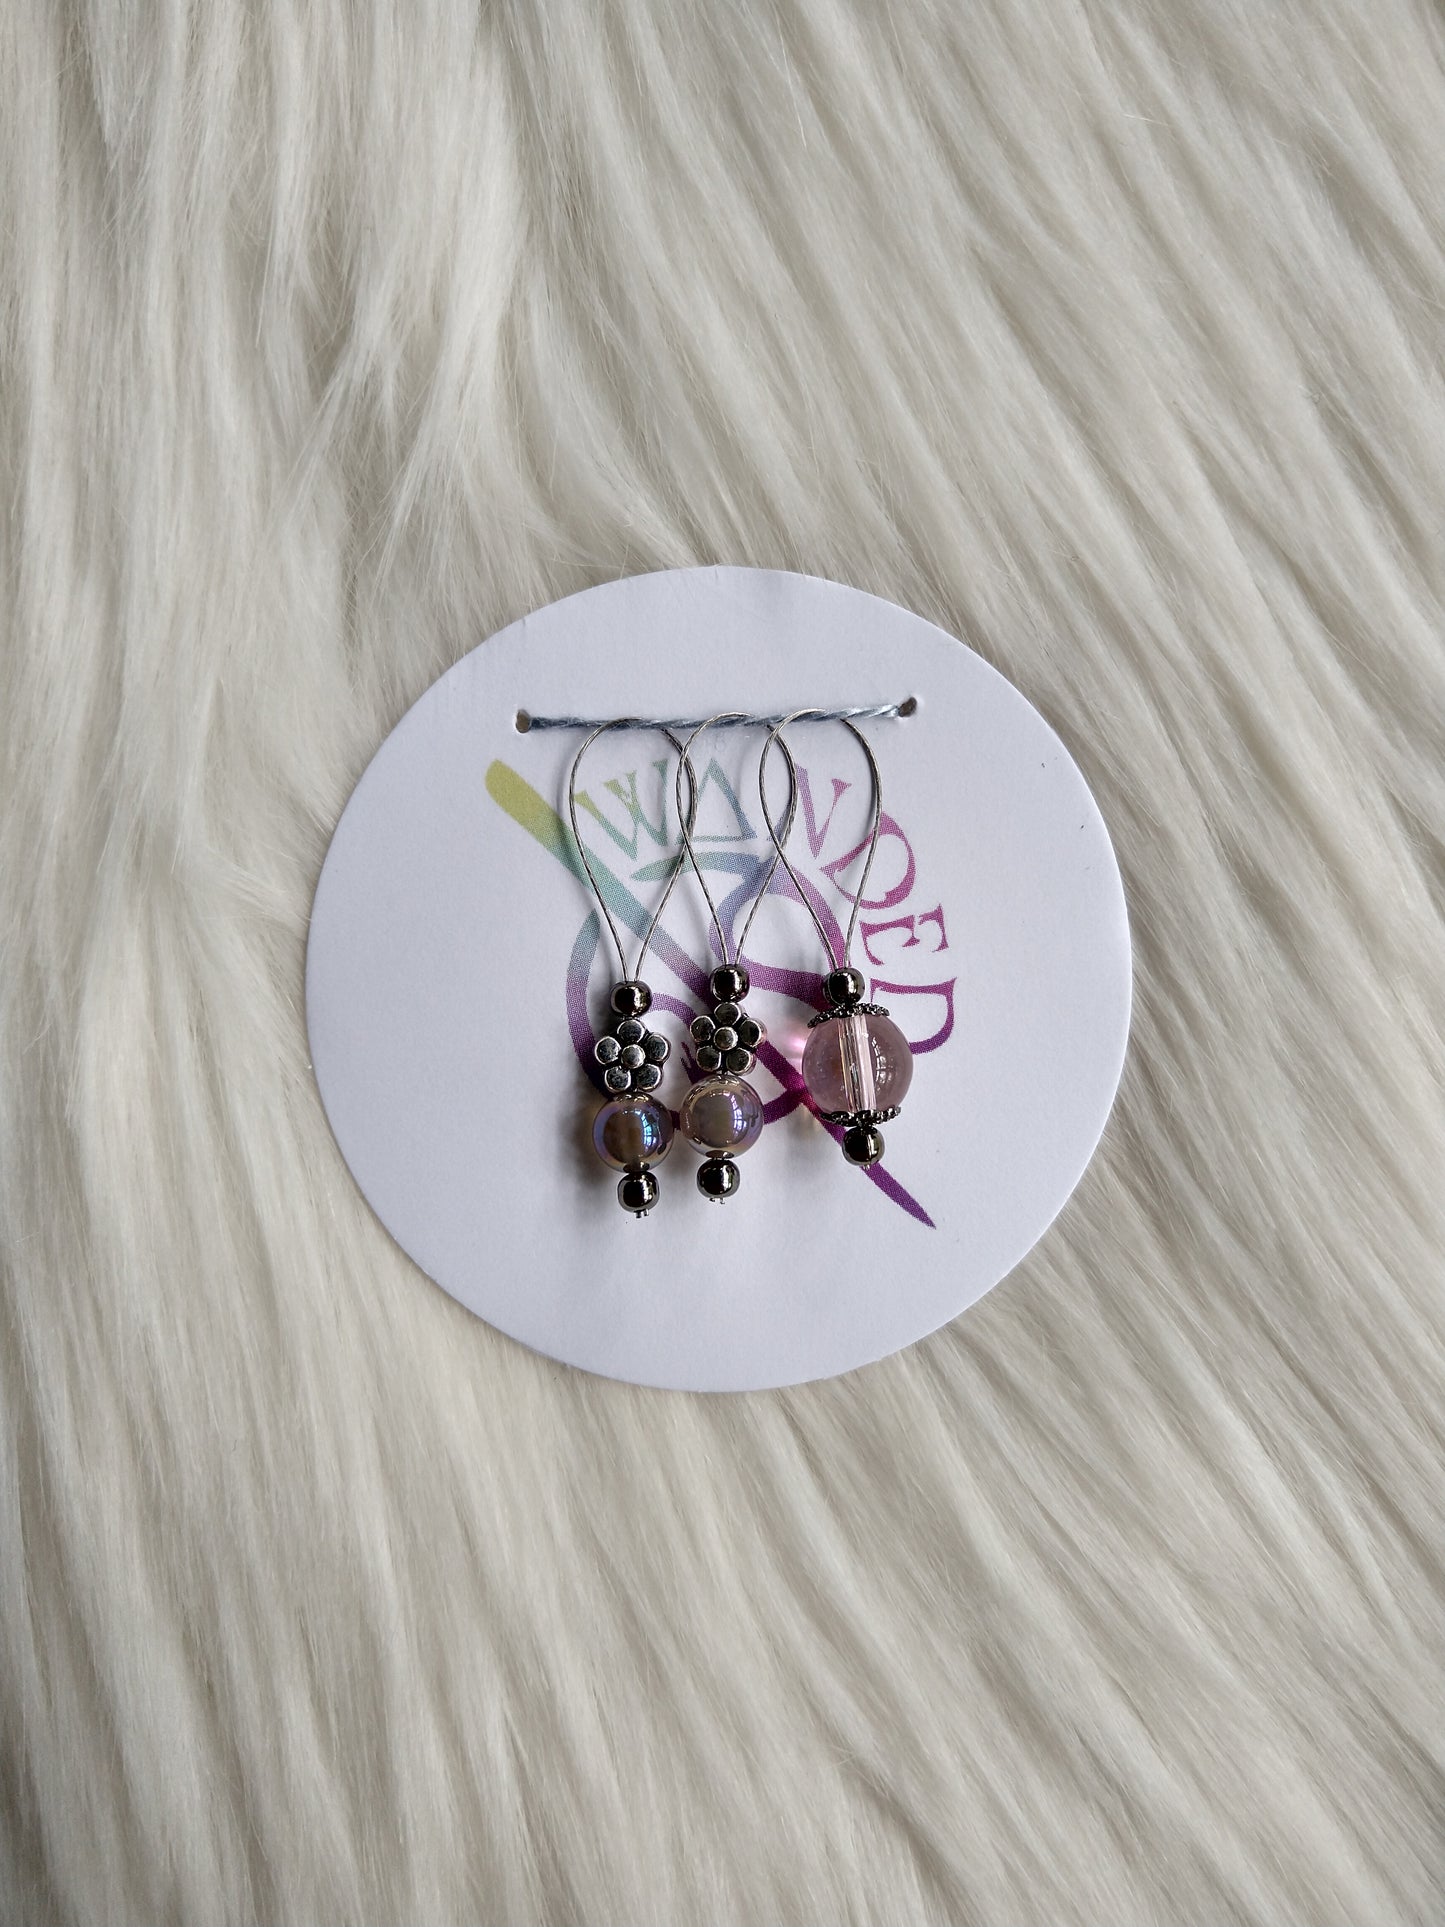 Stitch Markers - iridescent beads, set of 3